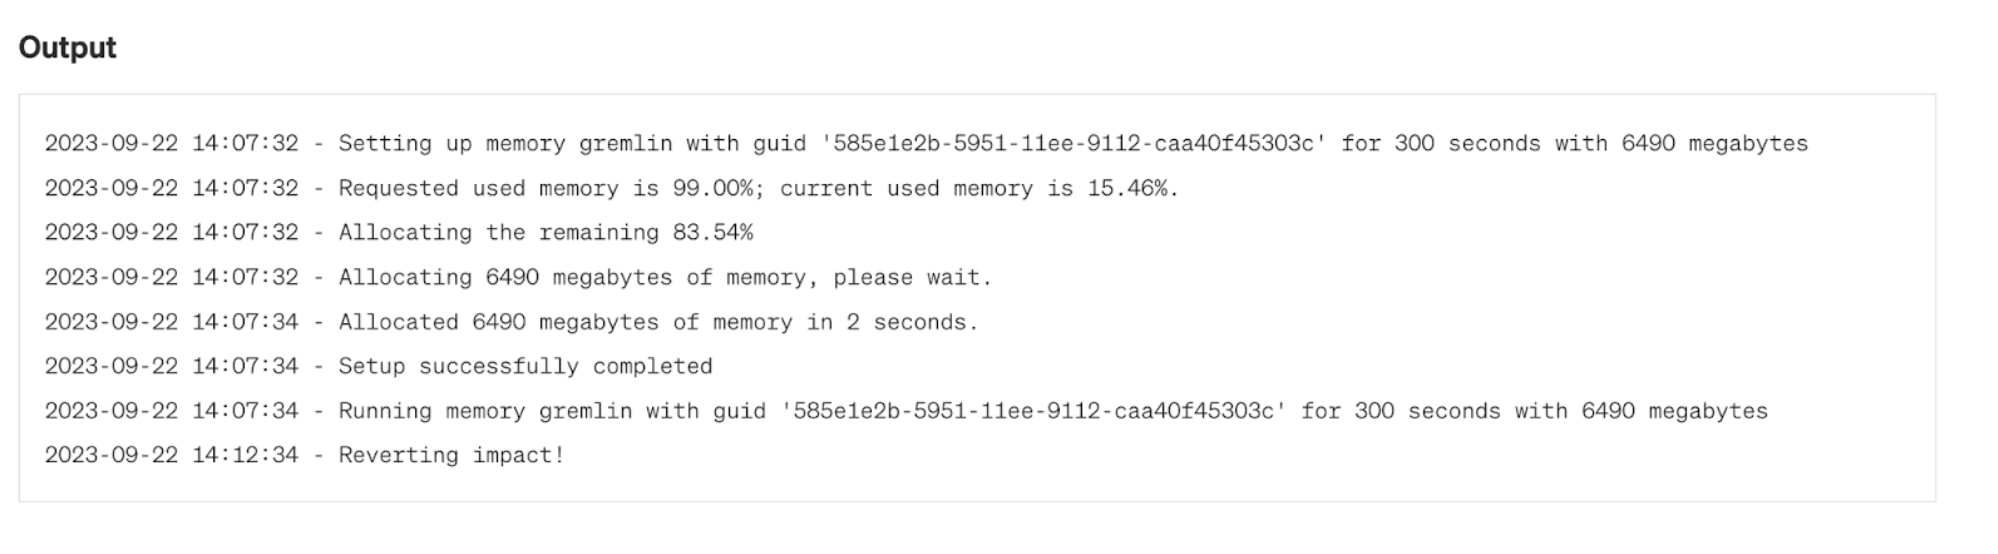 Memory usage output